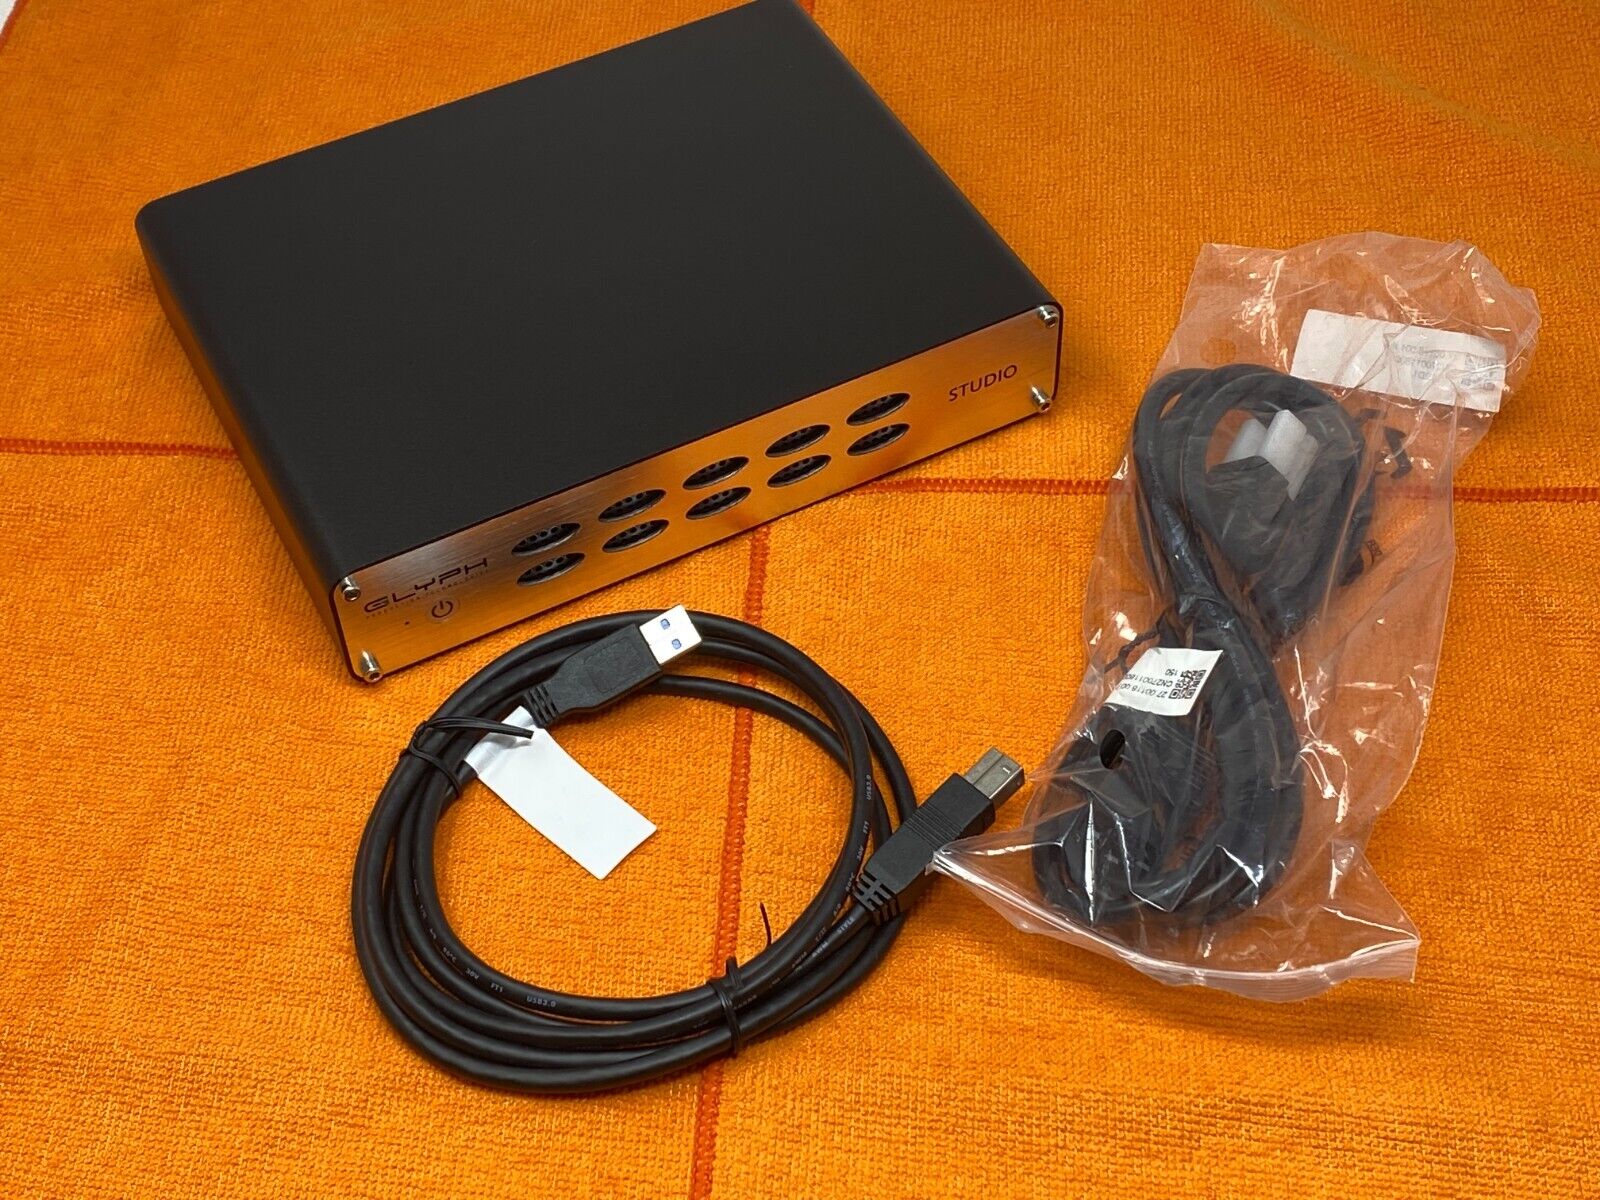 GLYPH TECHNOLOGIES 4TB STUDIO S4000 USB3.0 FIREWIRE EXTERNAL DRIVE USE 30 DAYS